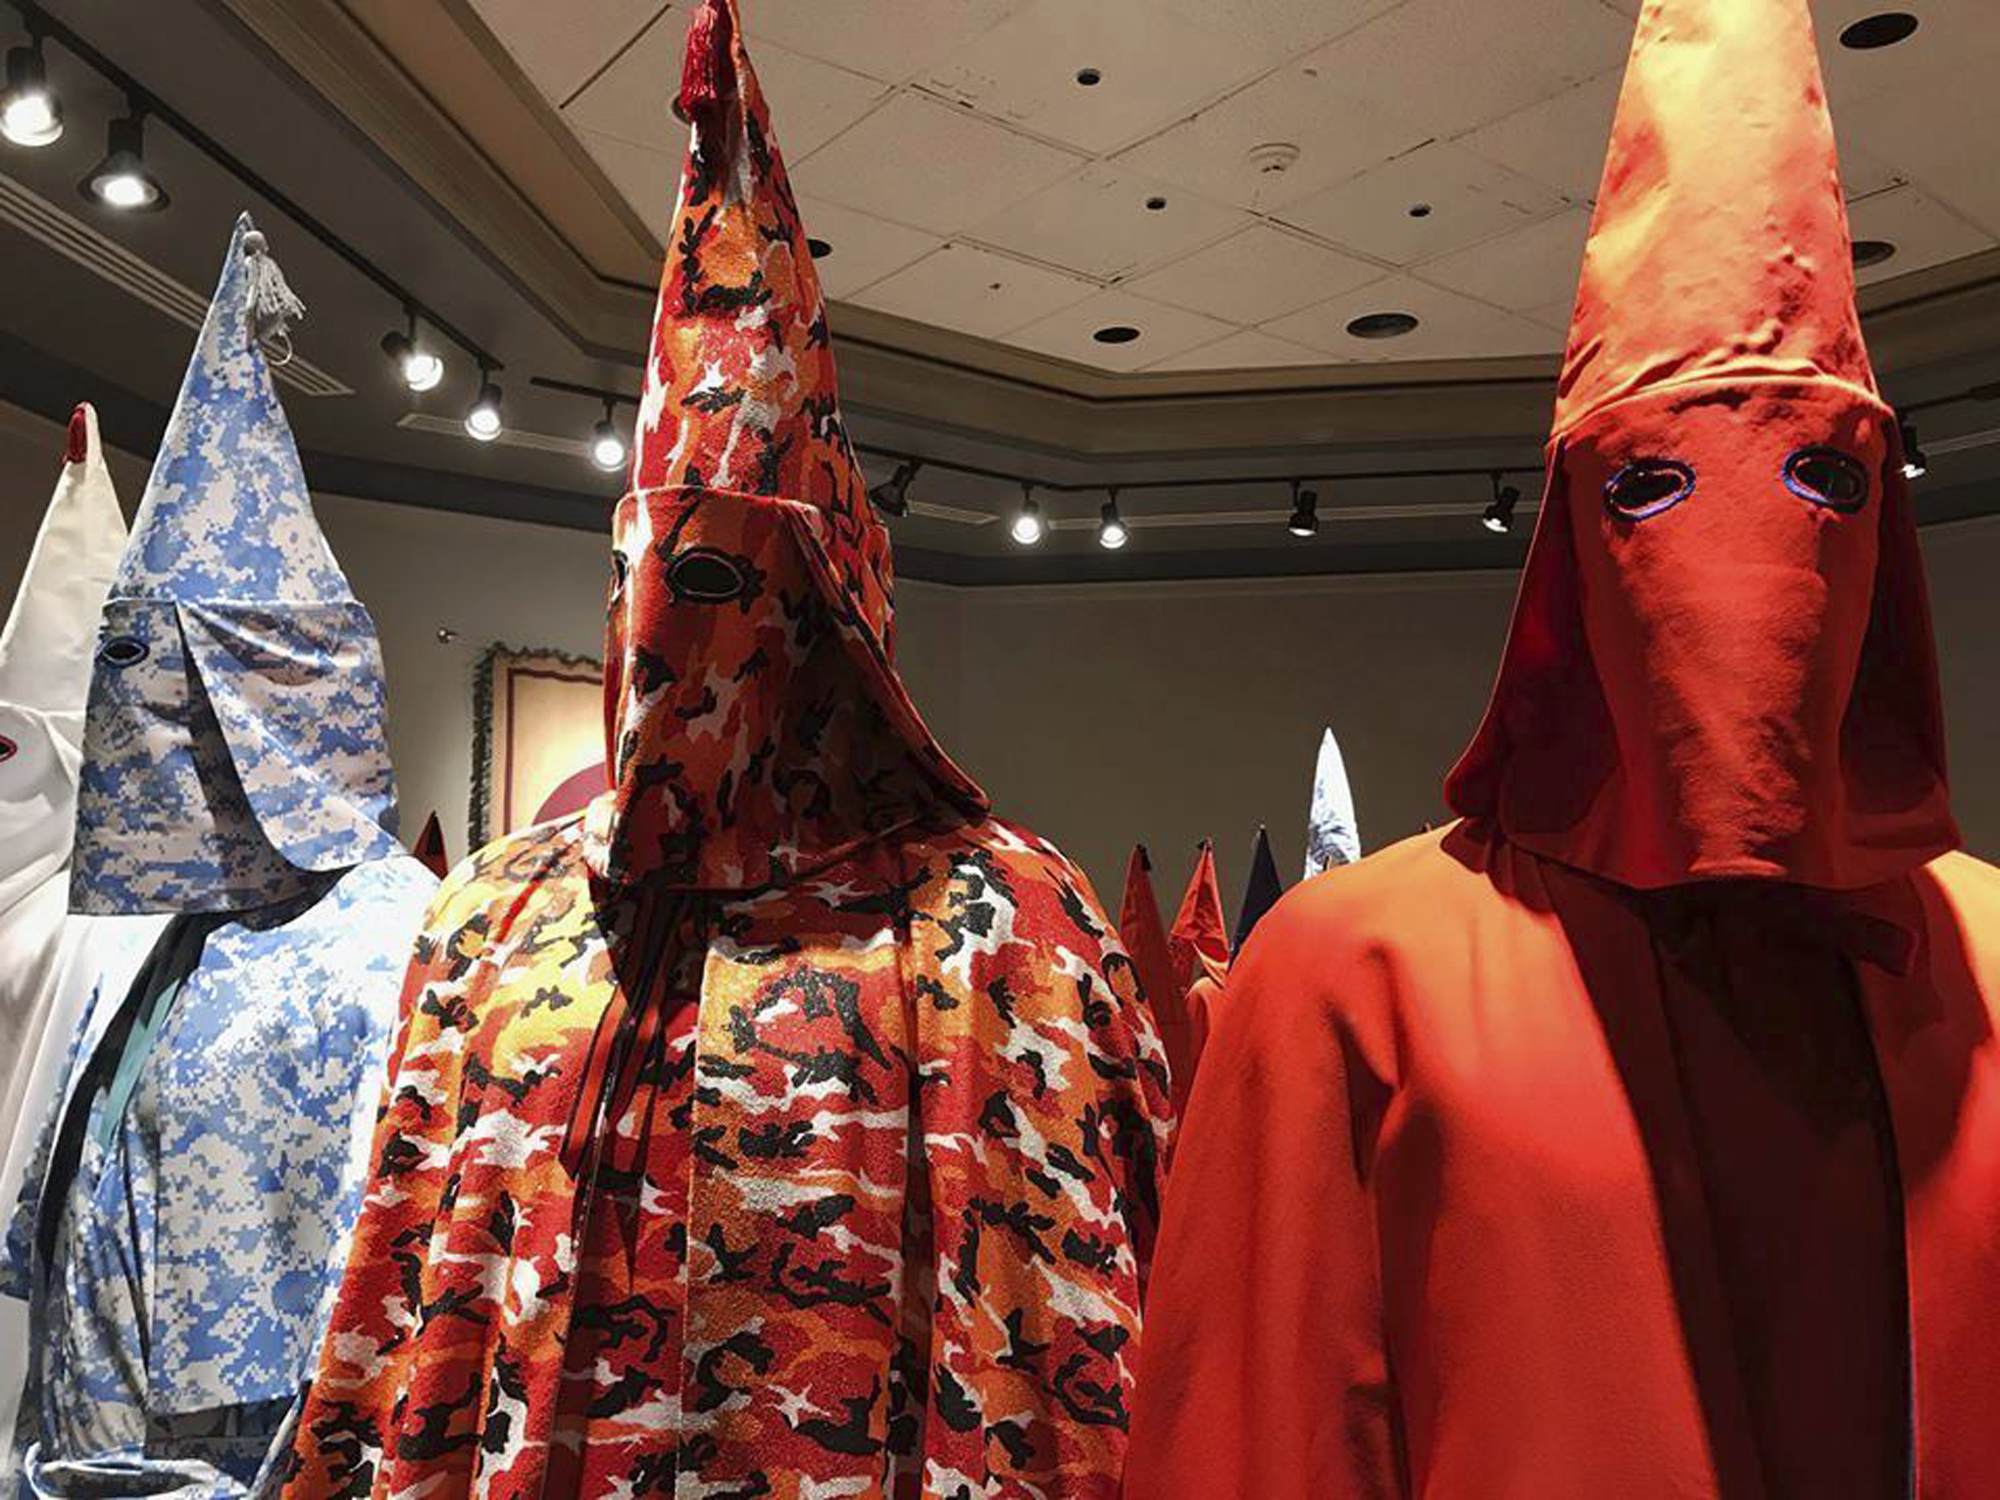 College bans public from 'disturbing' art exhibit featuring KKK robes